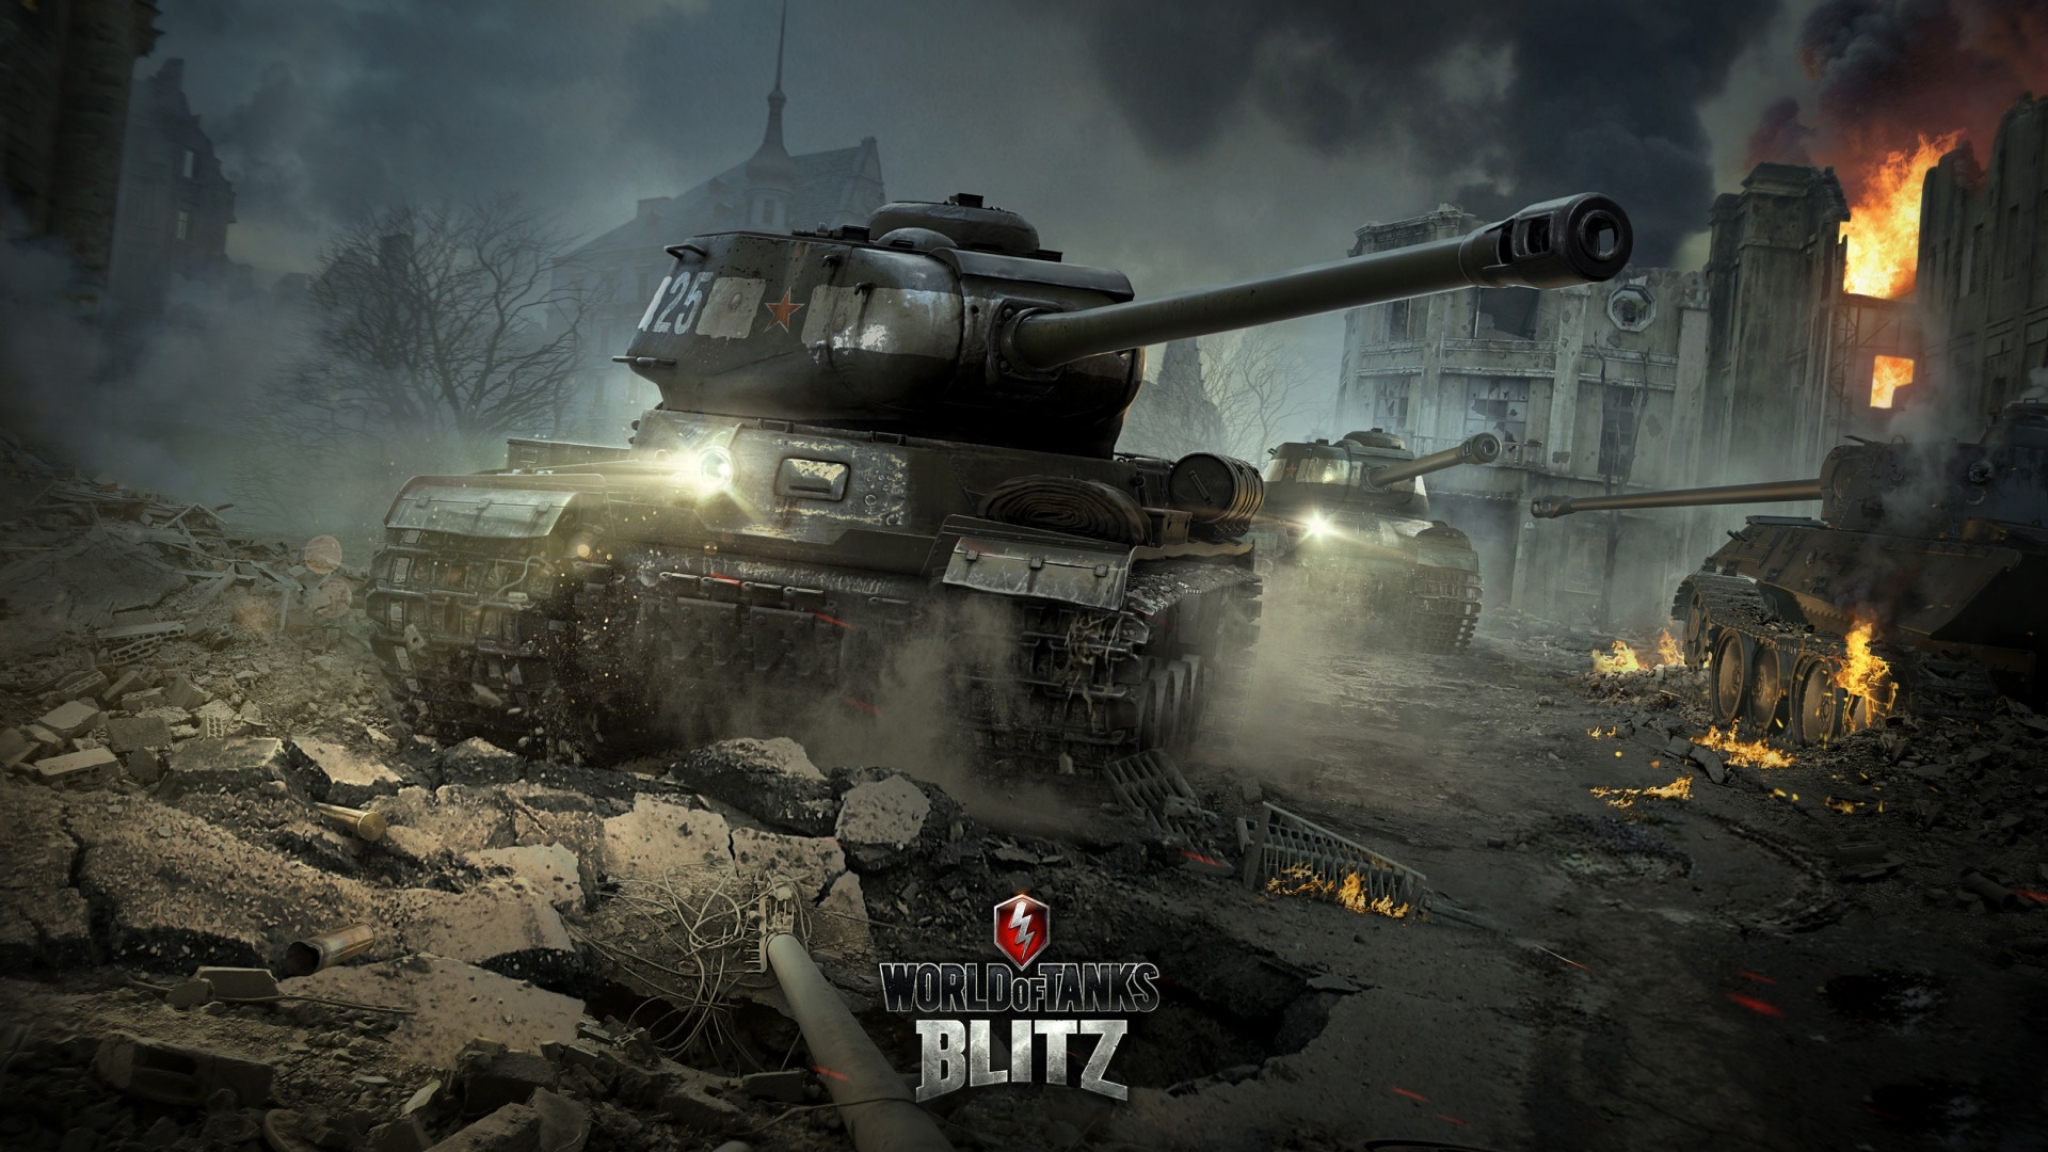 world of tanks blitz pc fail to download pc